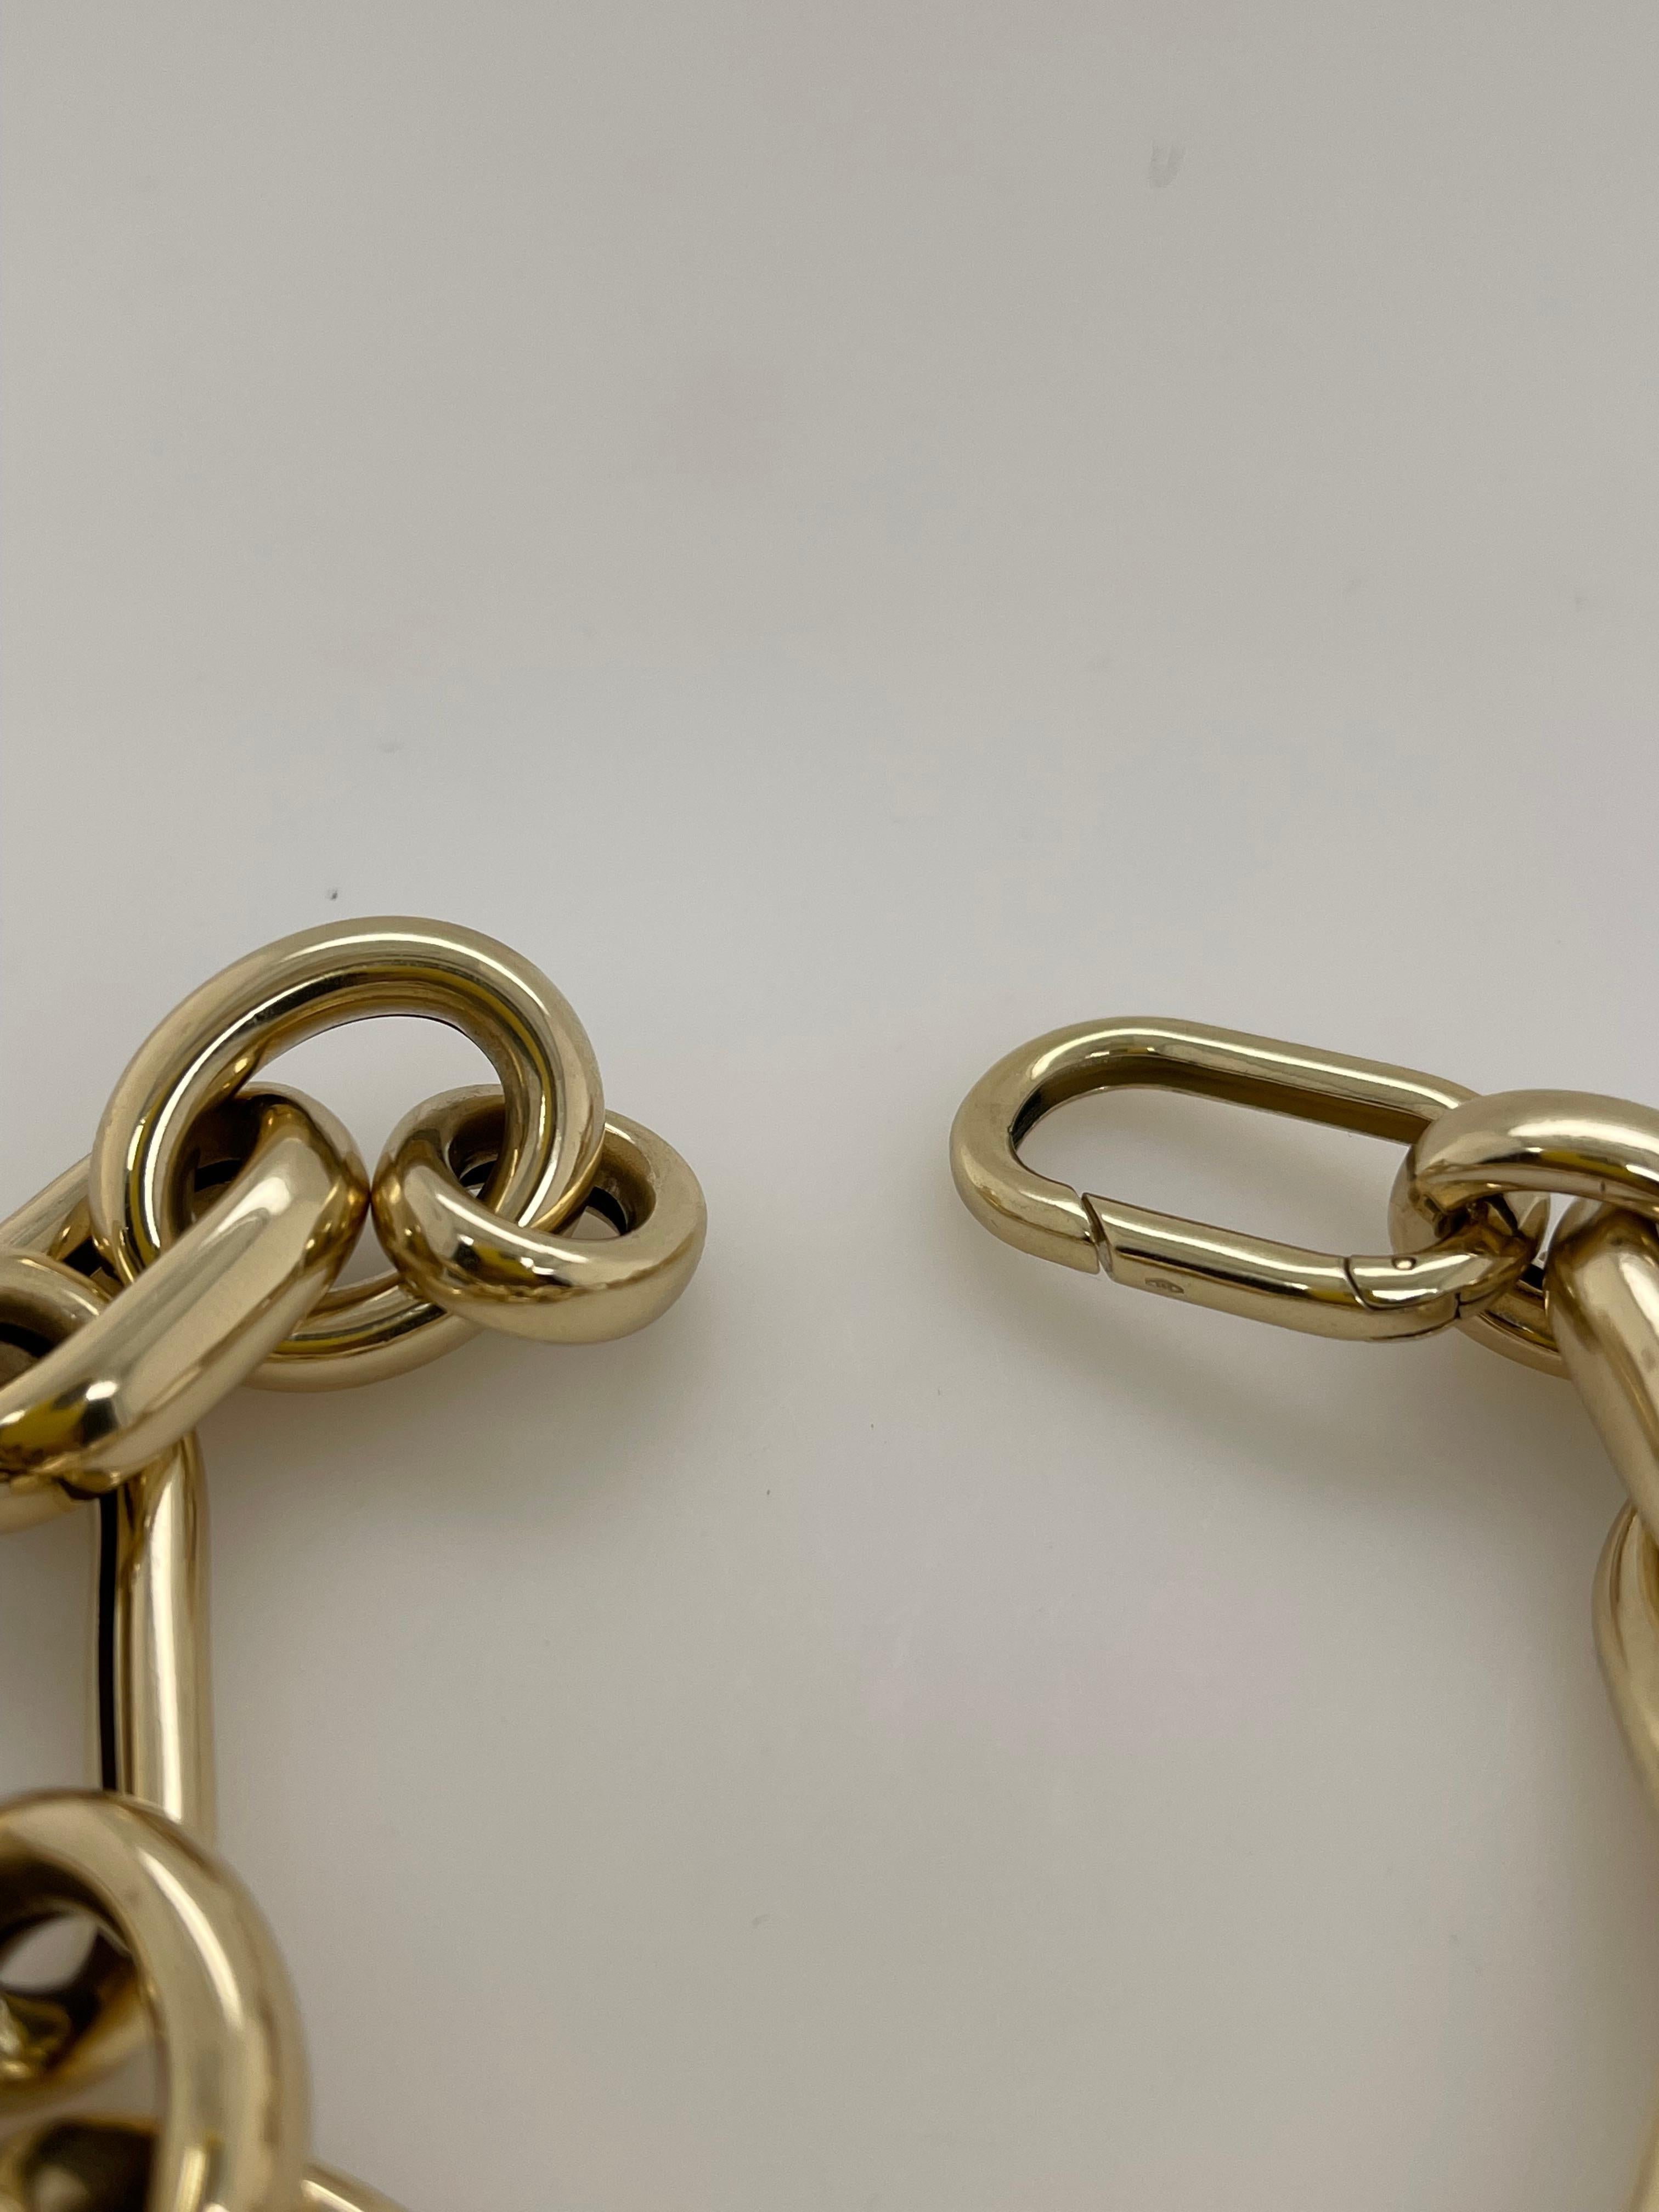 bracelet chain types